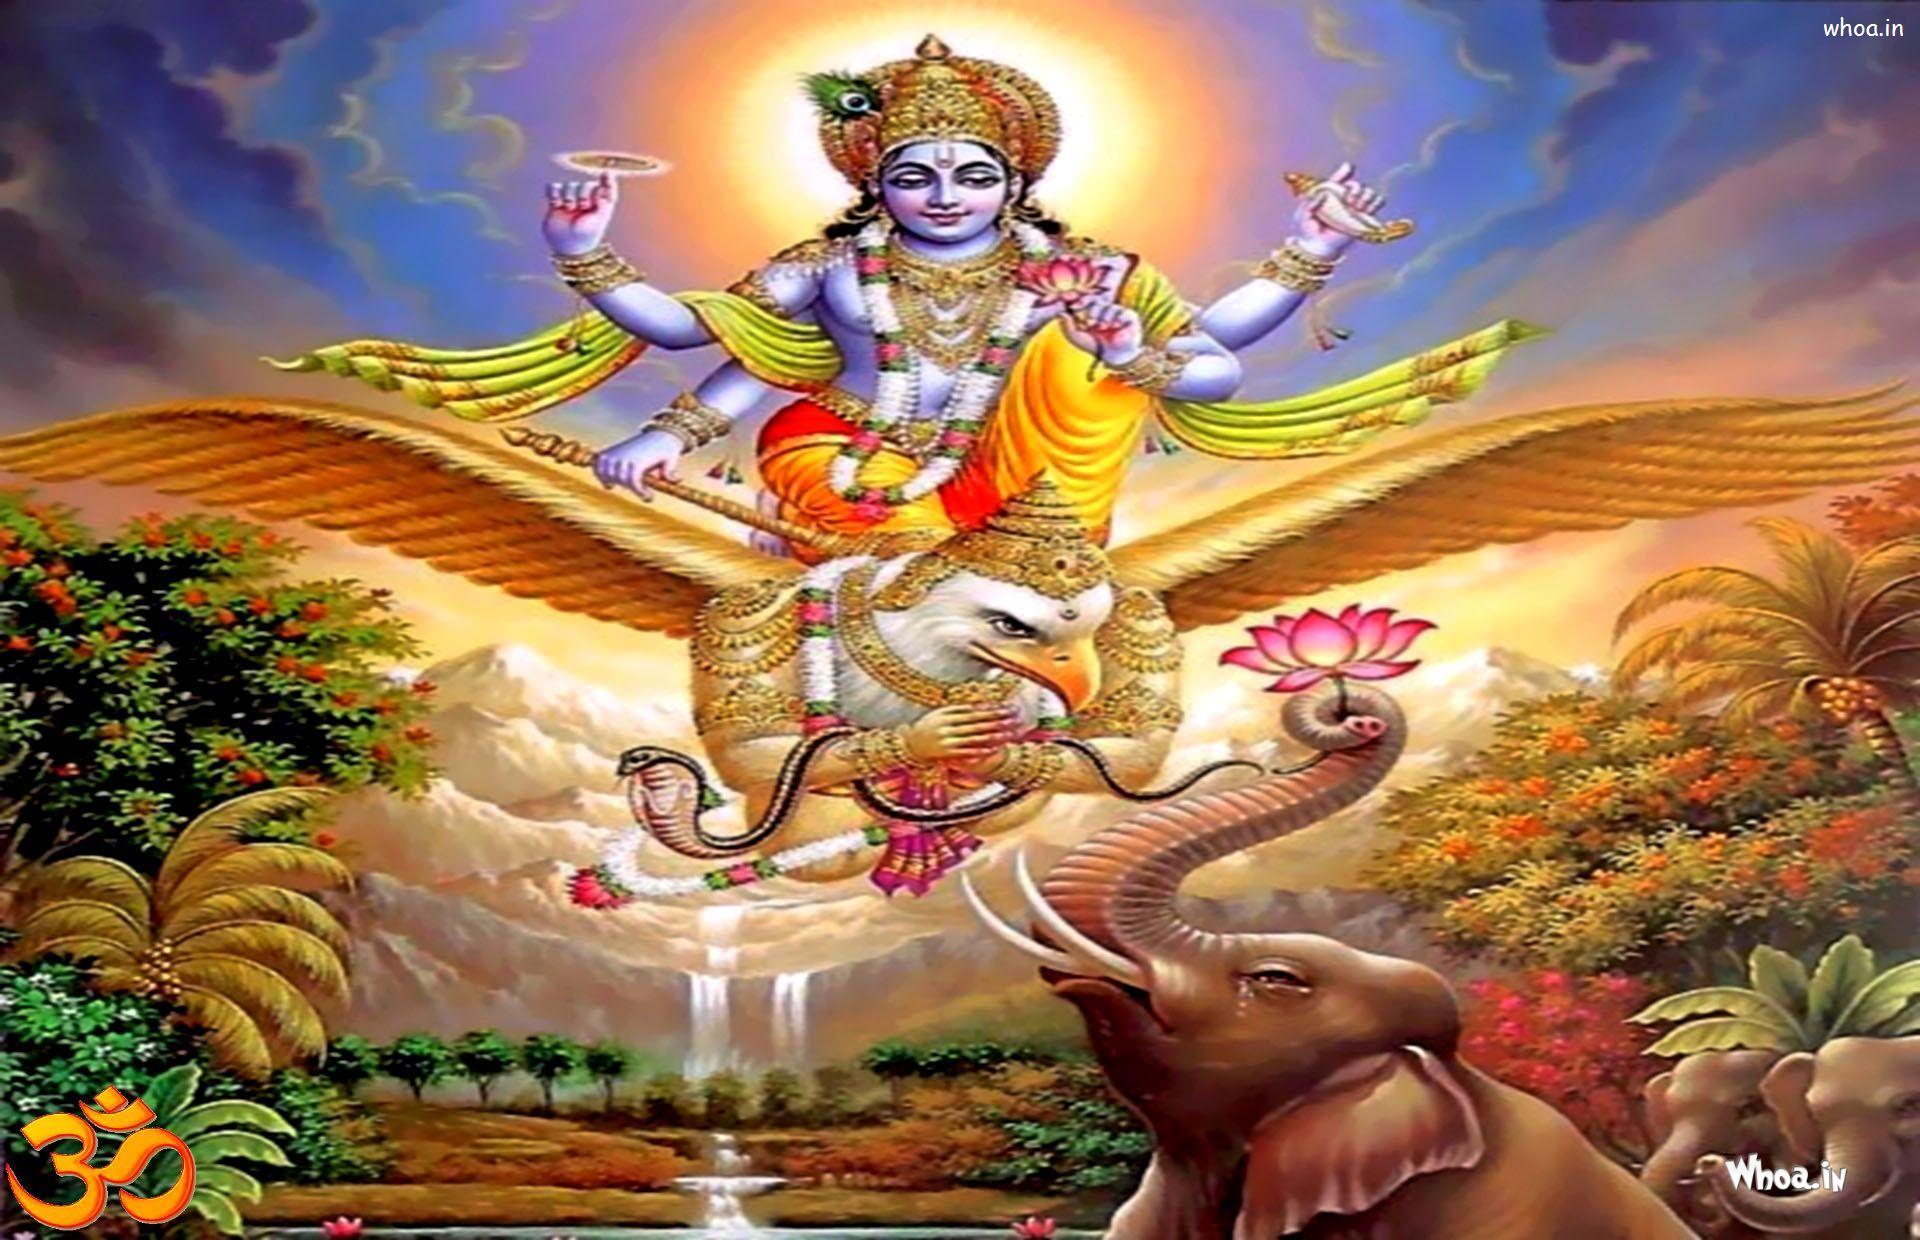 Lord Vishnu Image & Ultra Hd Wallpapers For Wishes #2 Lord-Vishnu Wallpaper